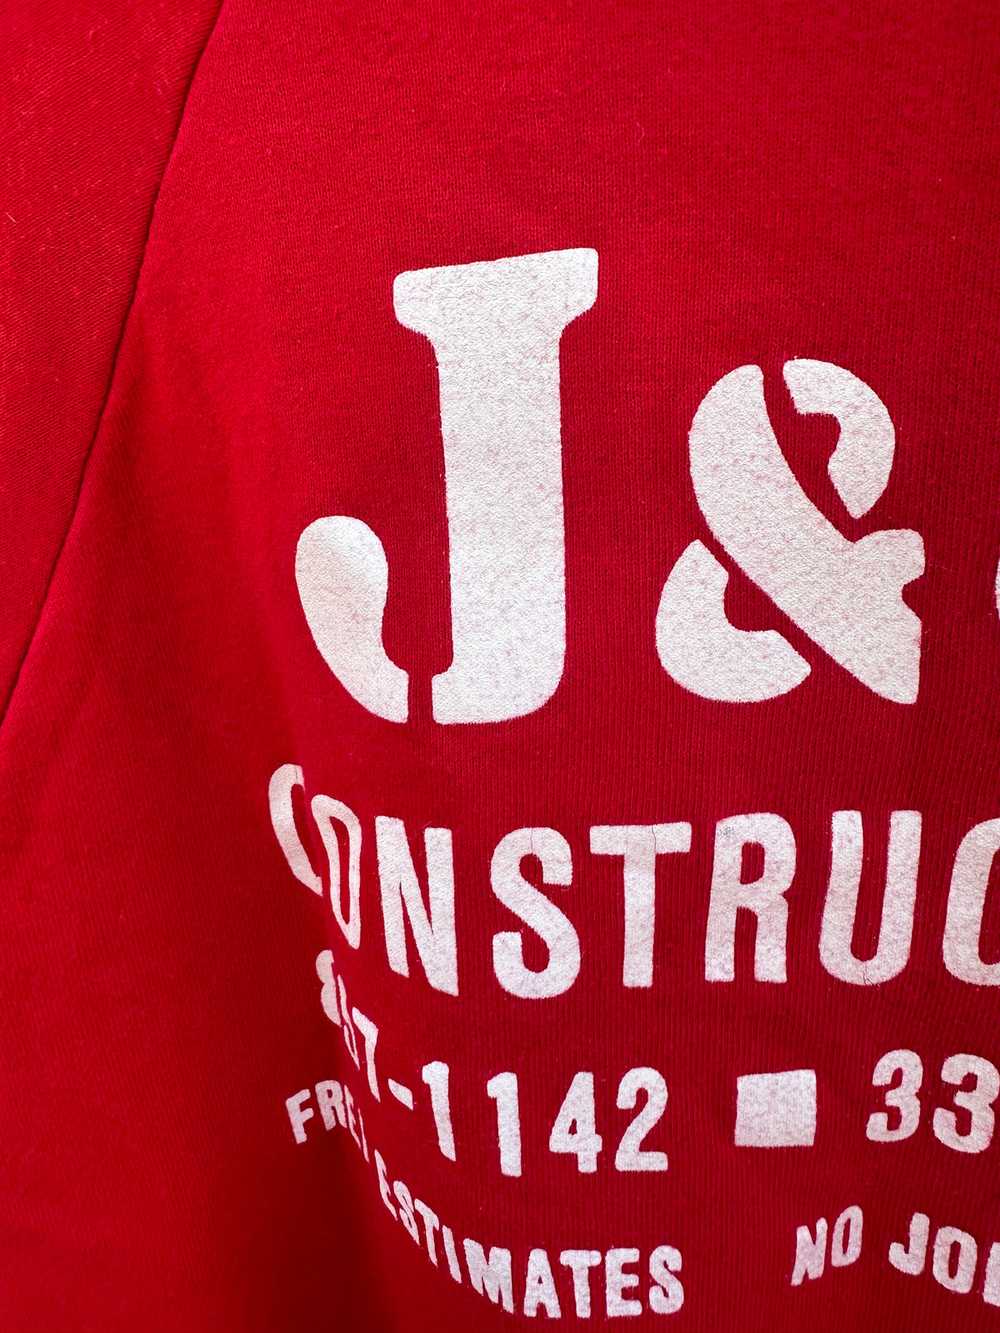 J & J Construction Sweatshirt - image 2